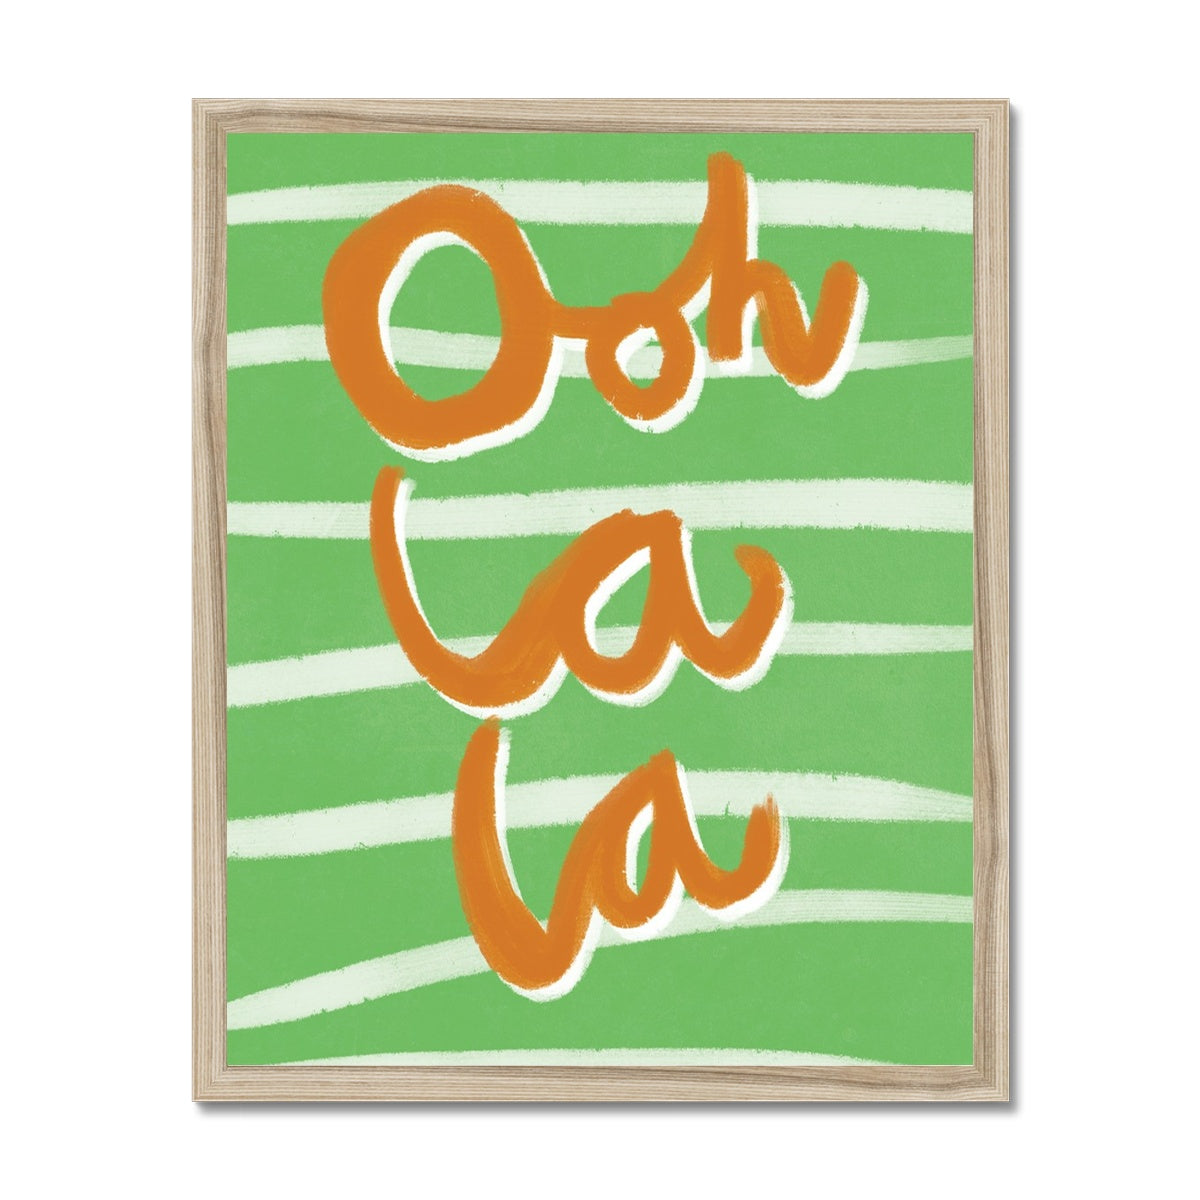 Ooh La La Art Print - Green, White and Brown Framed Print